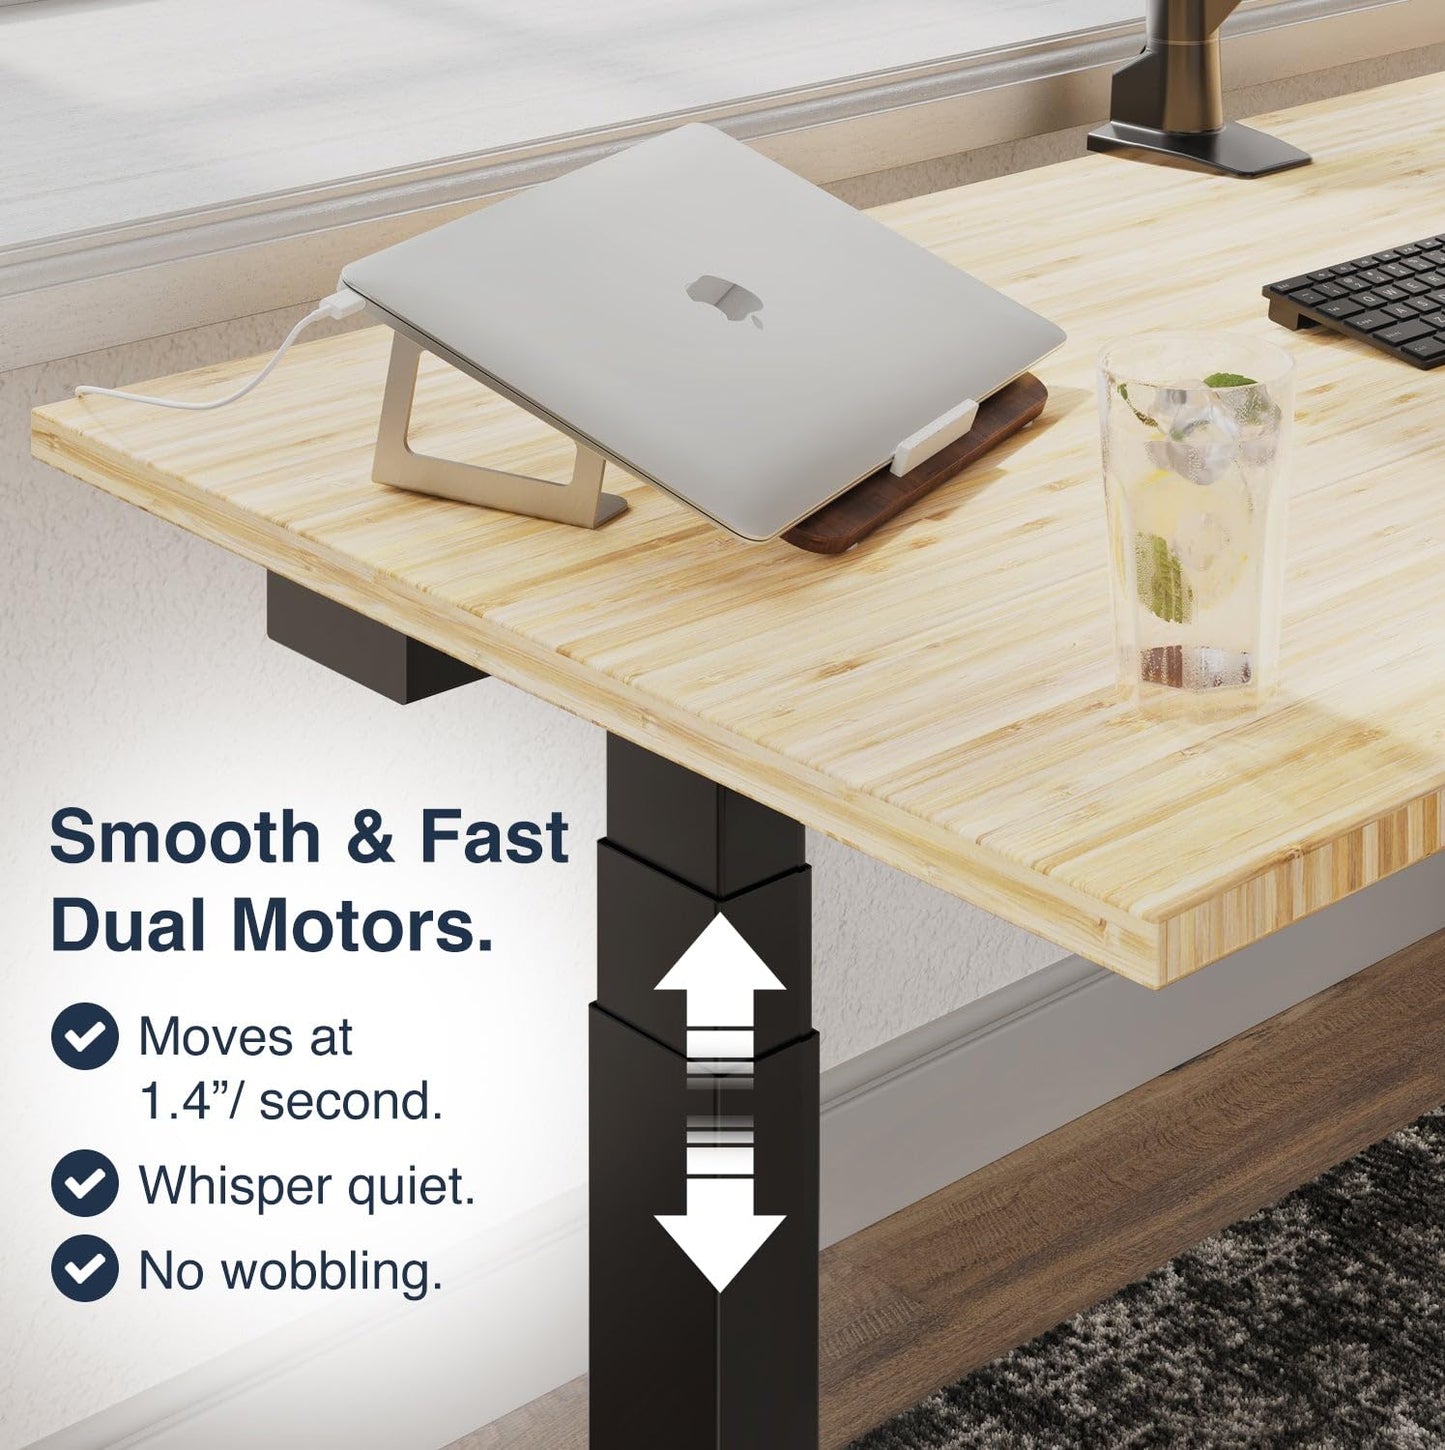 Desky Dual Light Bamboo Standing Desk - 72x30 Electric Standing Desk - Dual Motor, 3 Stage Adjustable Height Desk with 4 presets - Ergonomic Wood